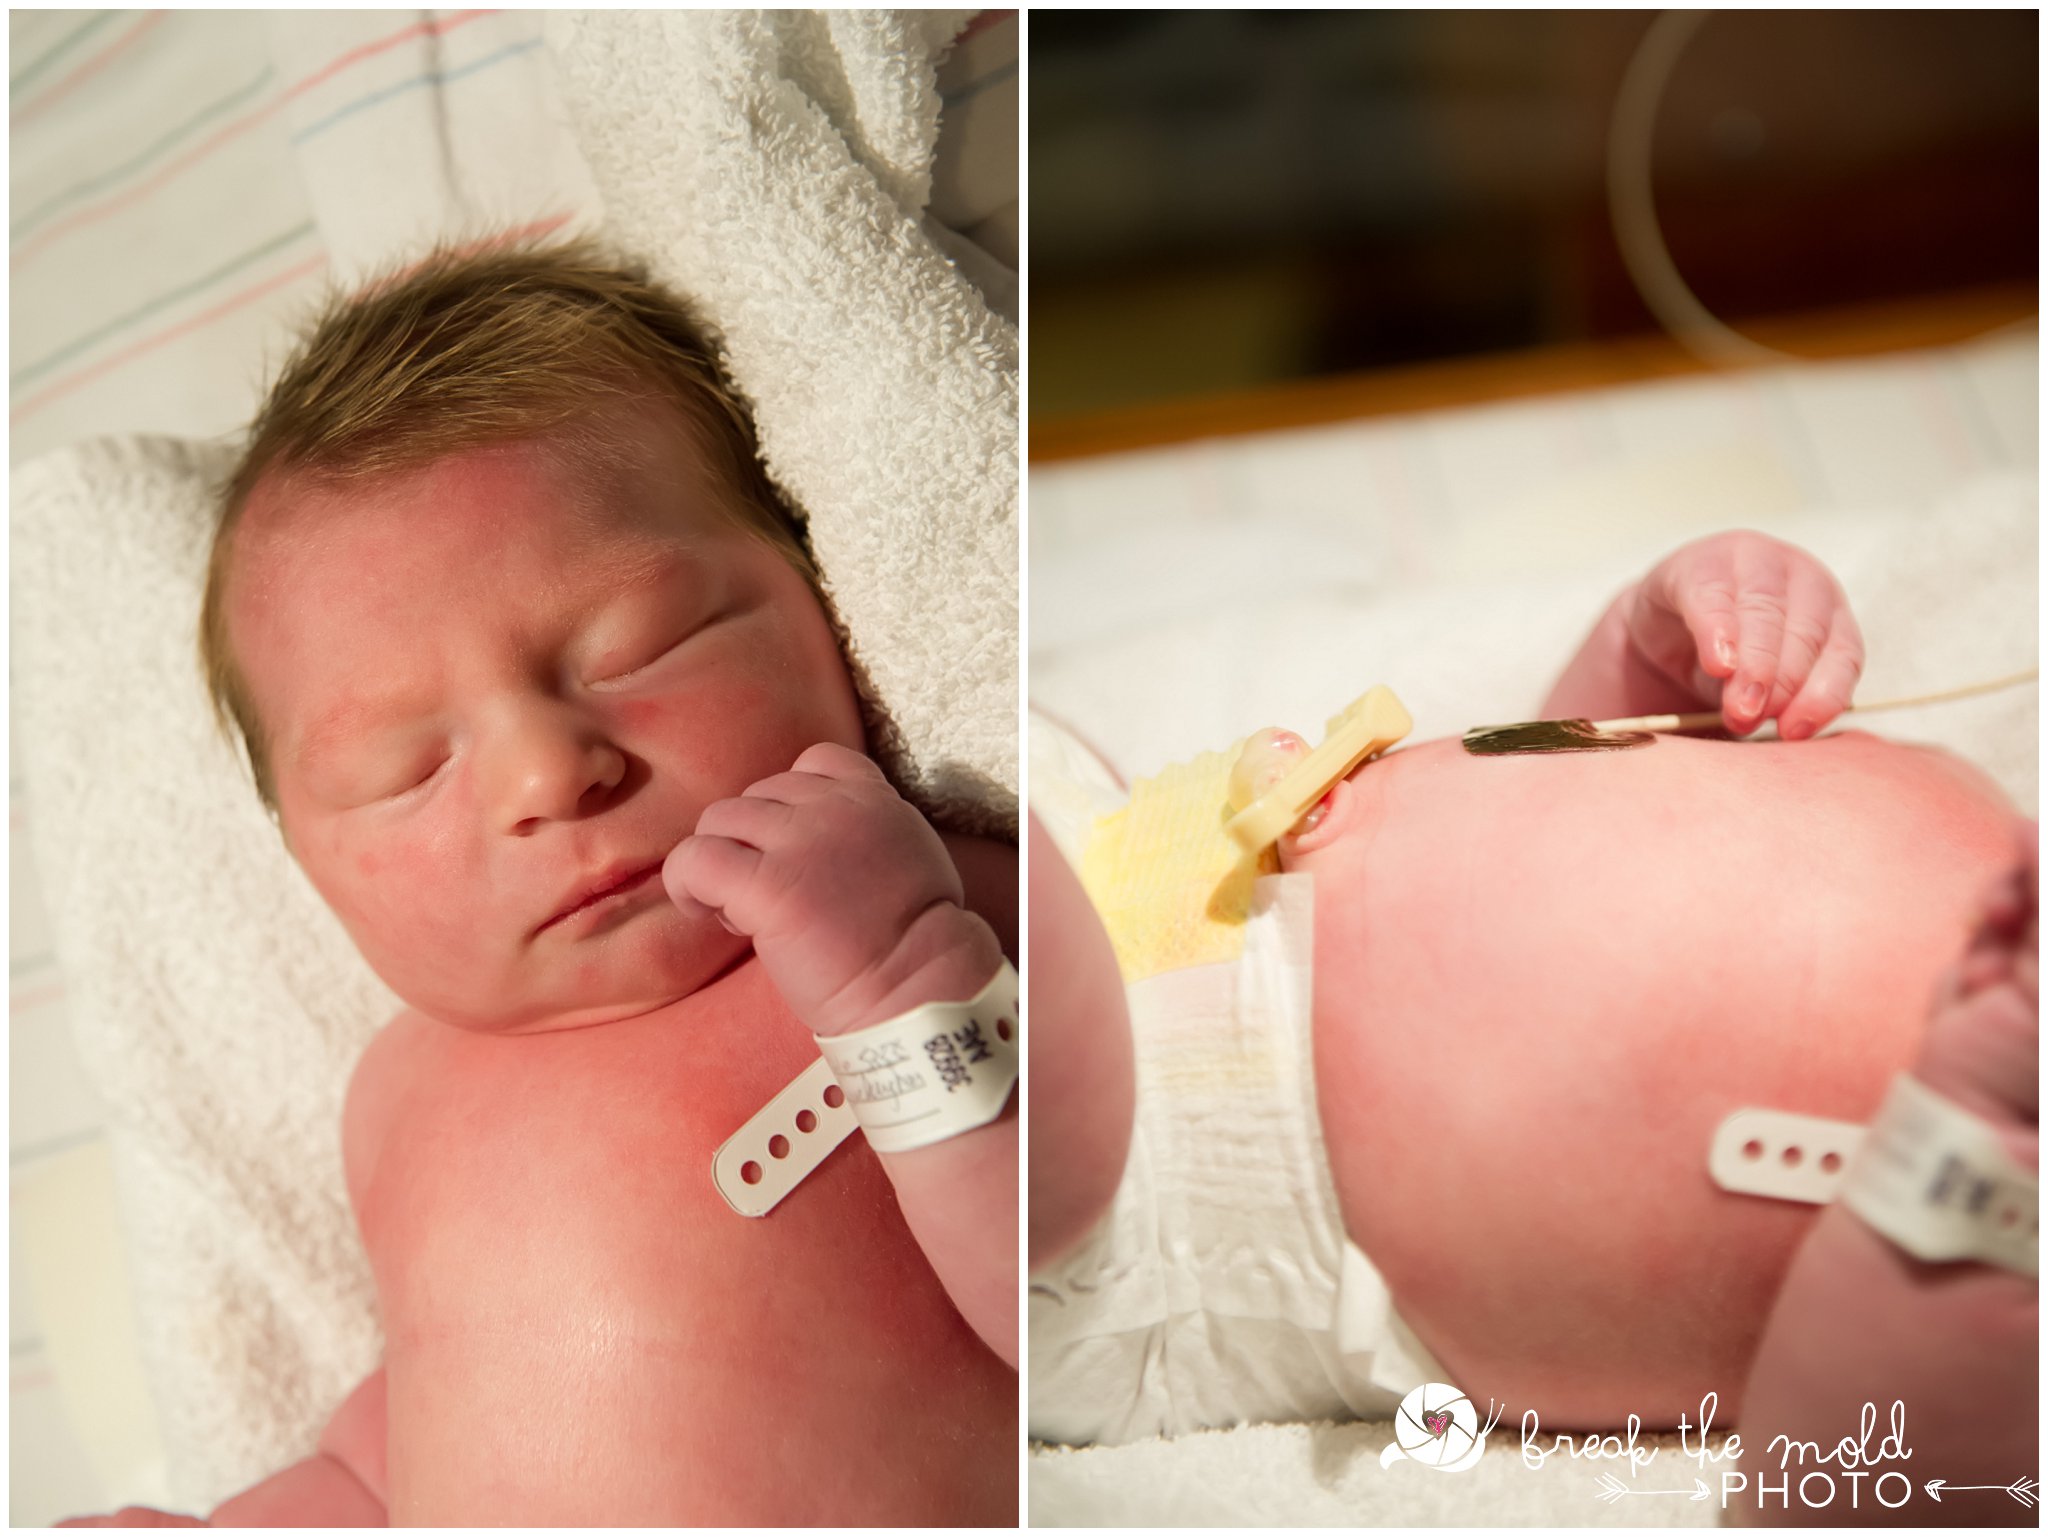 fresh-24-newborn-in-hospital-break-the-mold-photo-baby-girl-sweet-in-room-photos (10).jpg